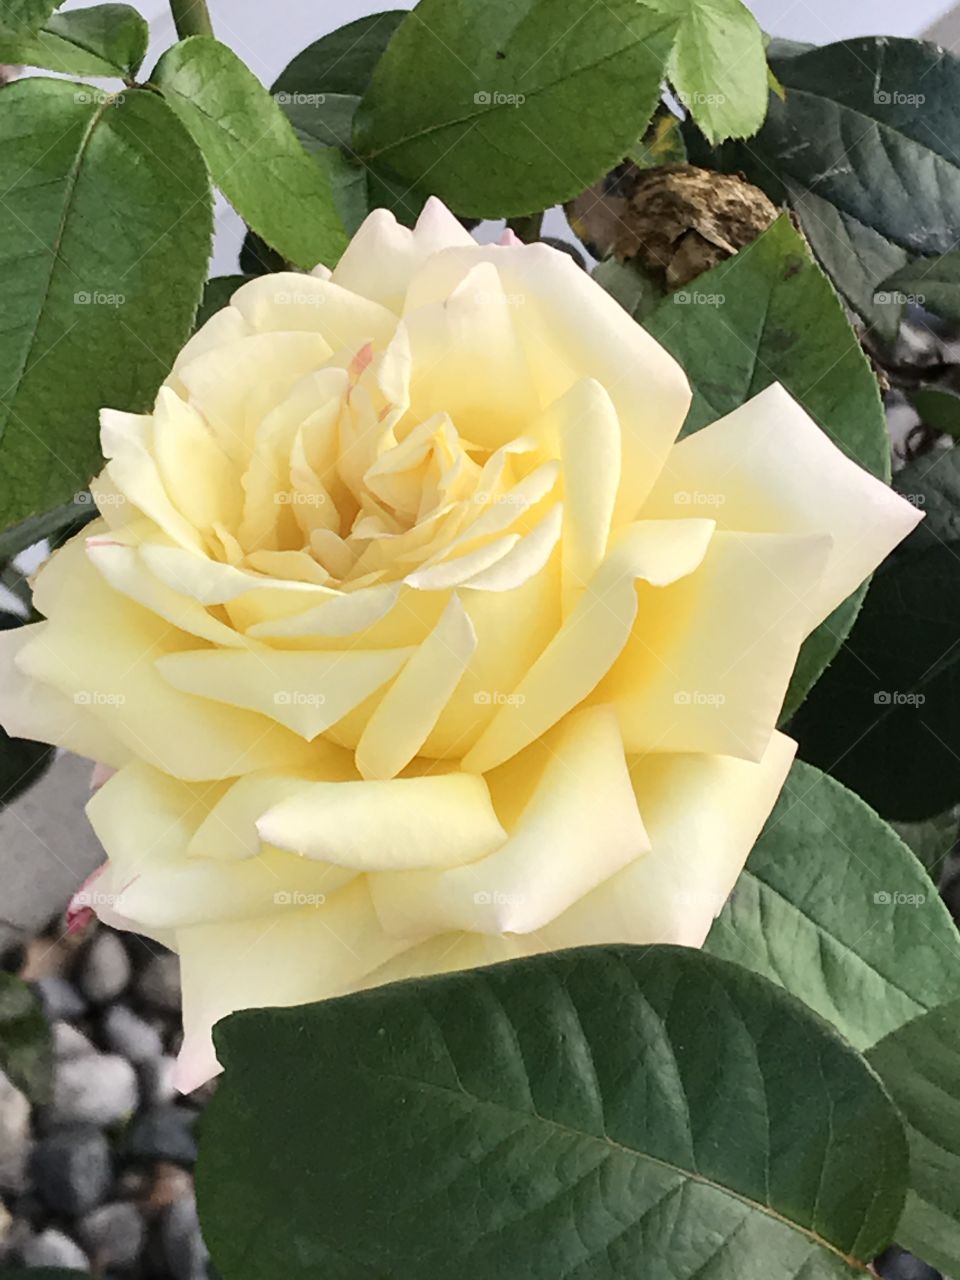 Single yellow rose on a rose bush